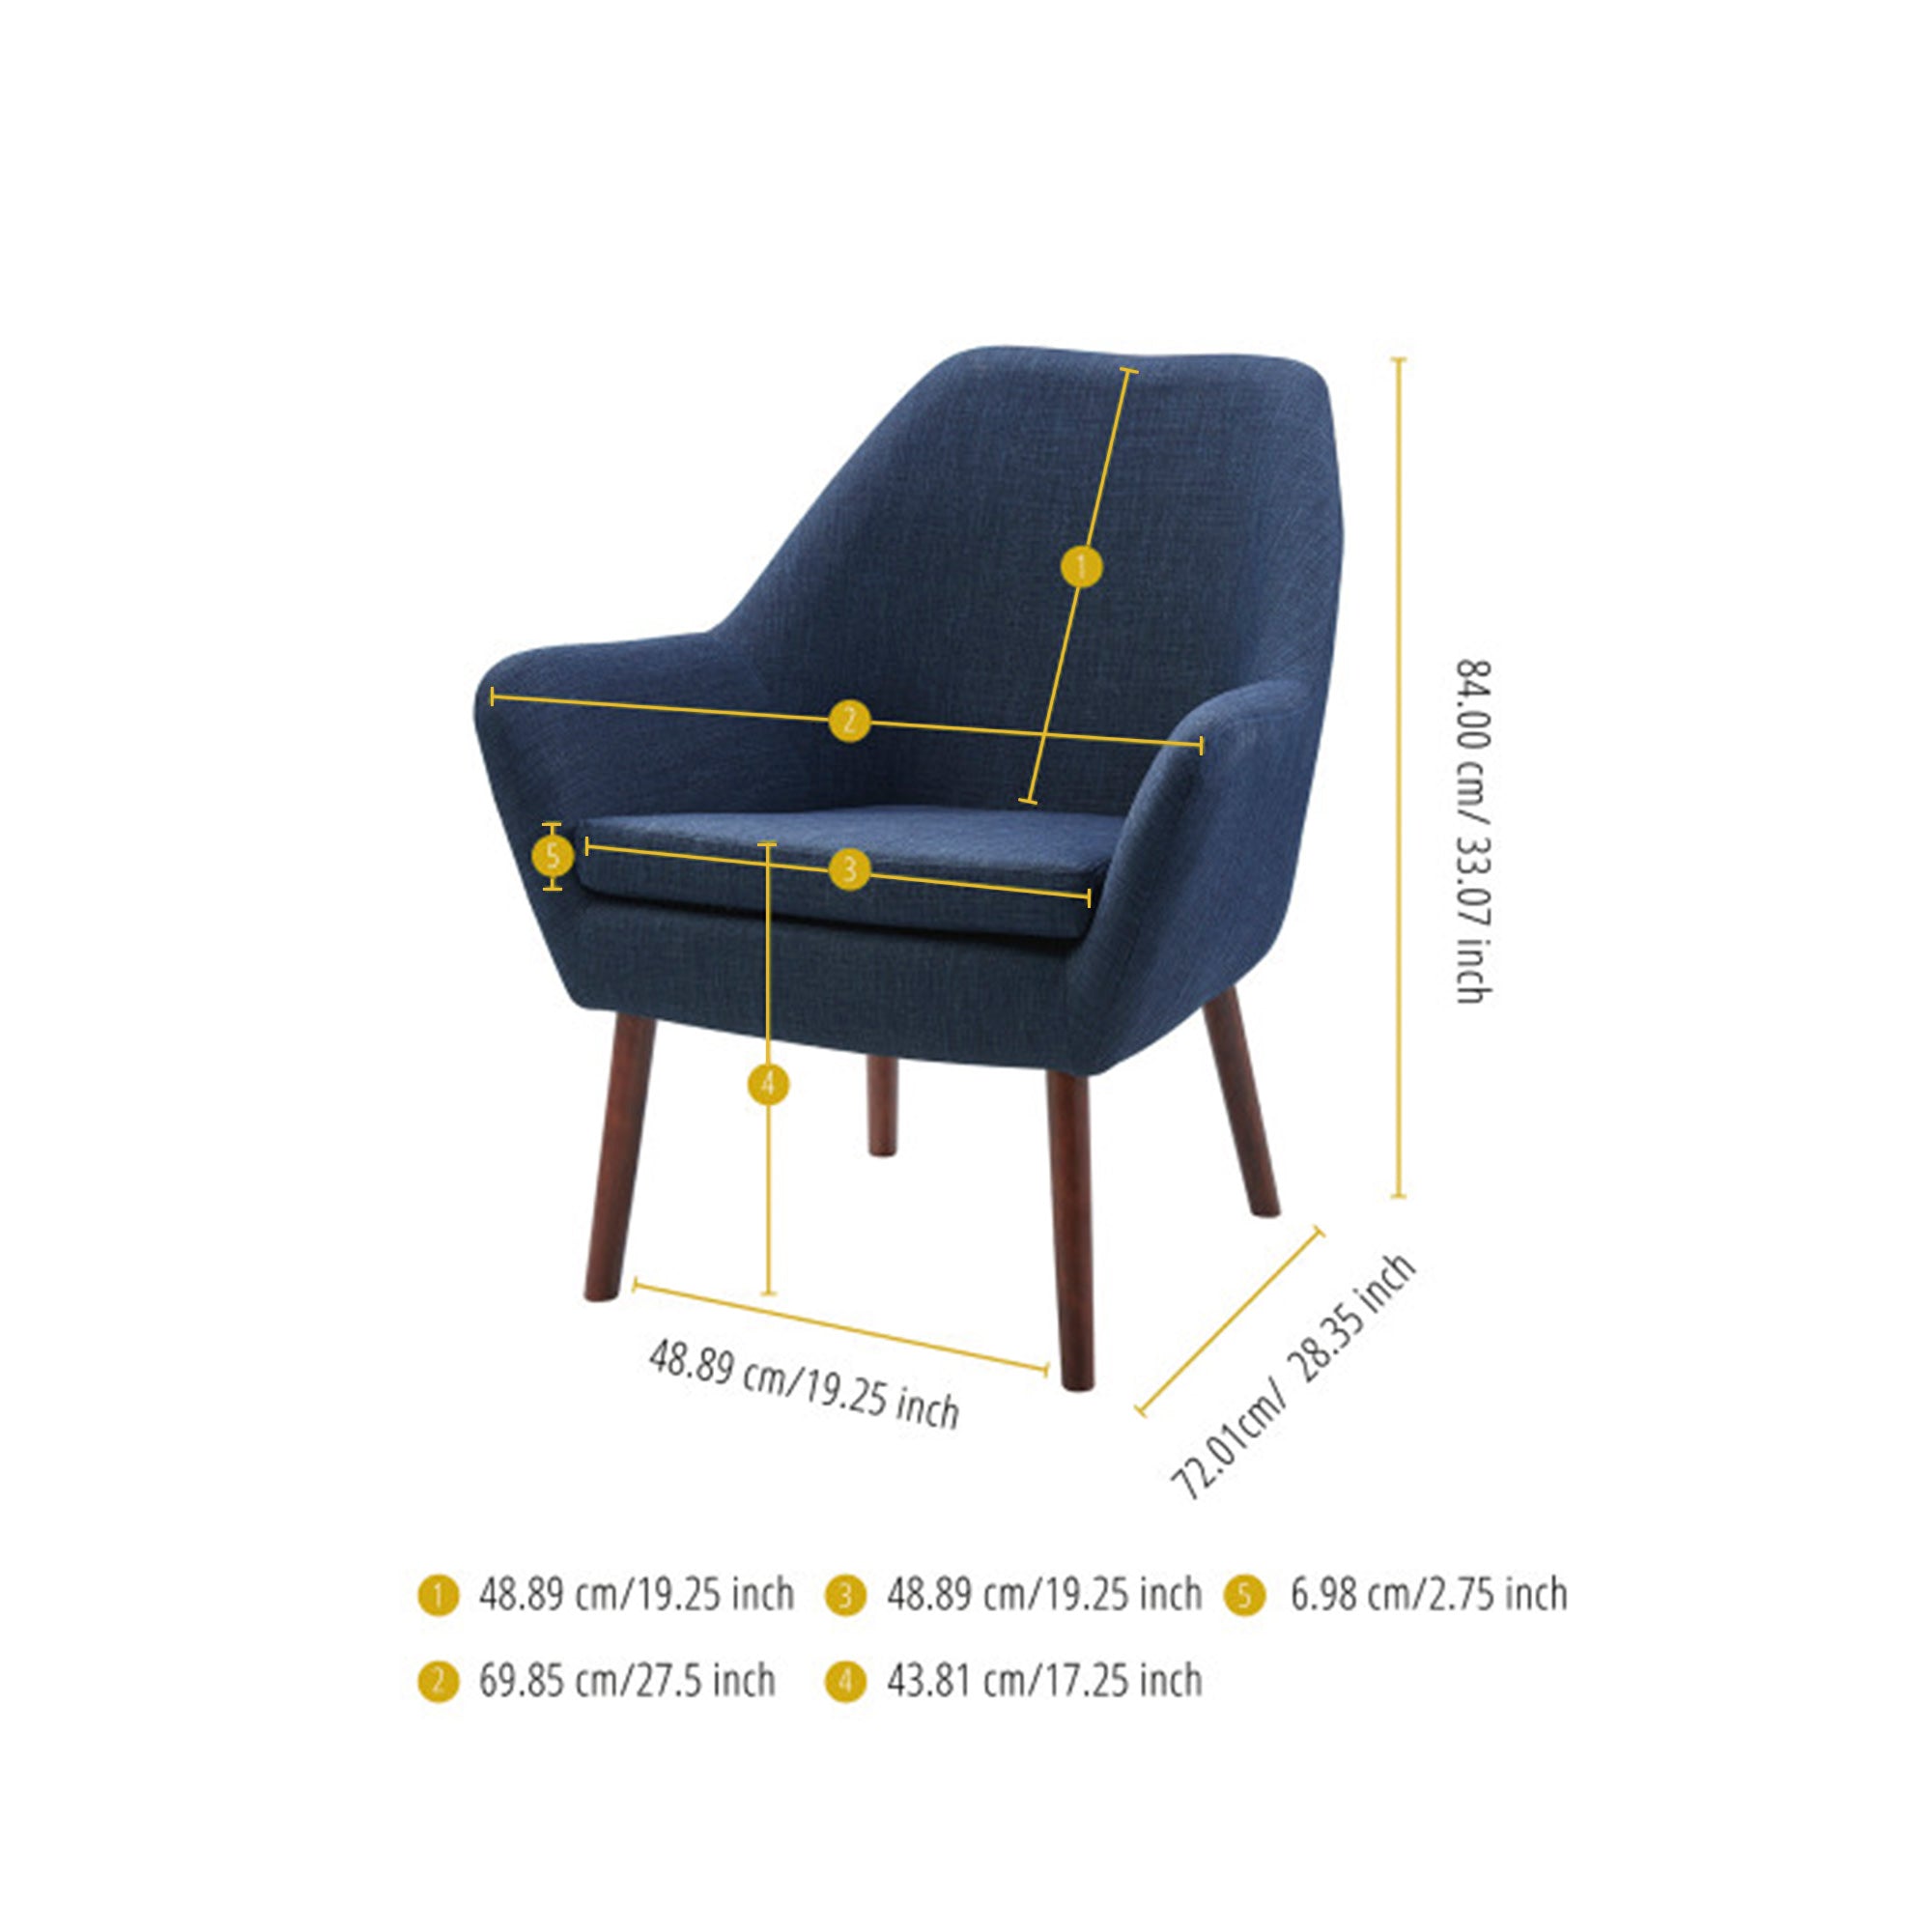 Teamson Home Divano Mid-Century Modern Armchair with Solid Wood Legs, Navy/Honey Oak